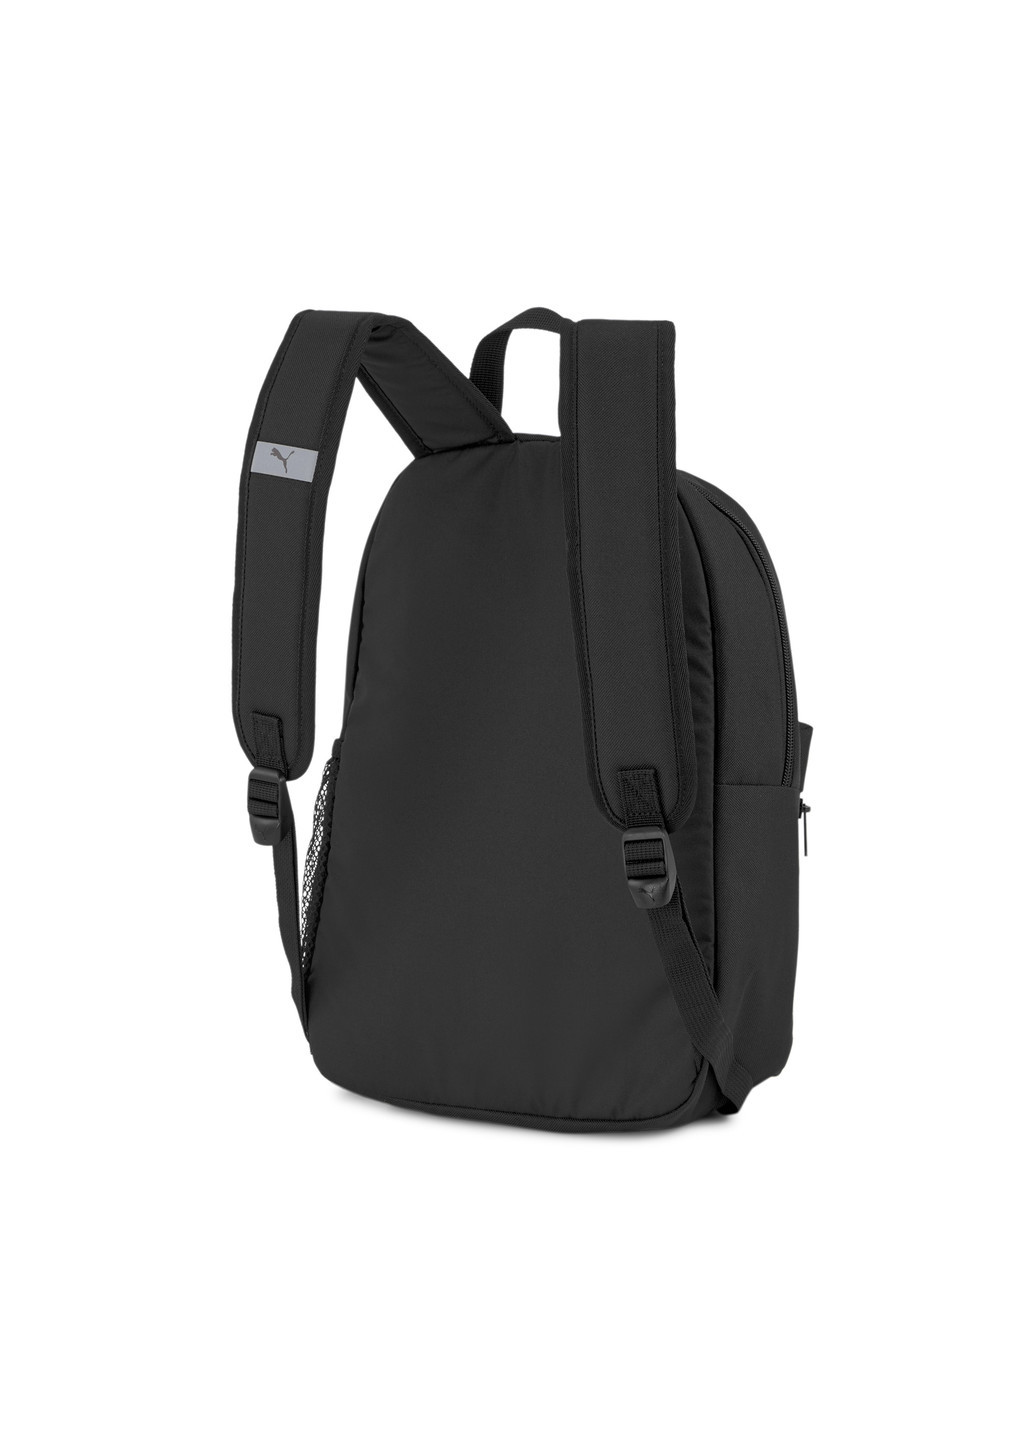 Дитячий рюкзак Phase Small Youth Backpack Puma однотонний чорний спортивний